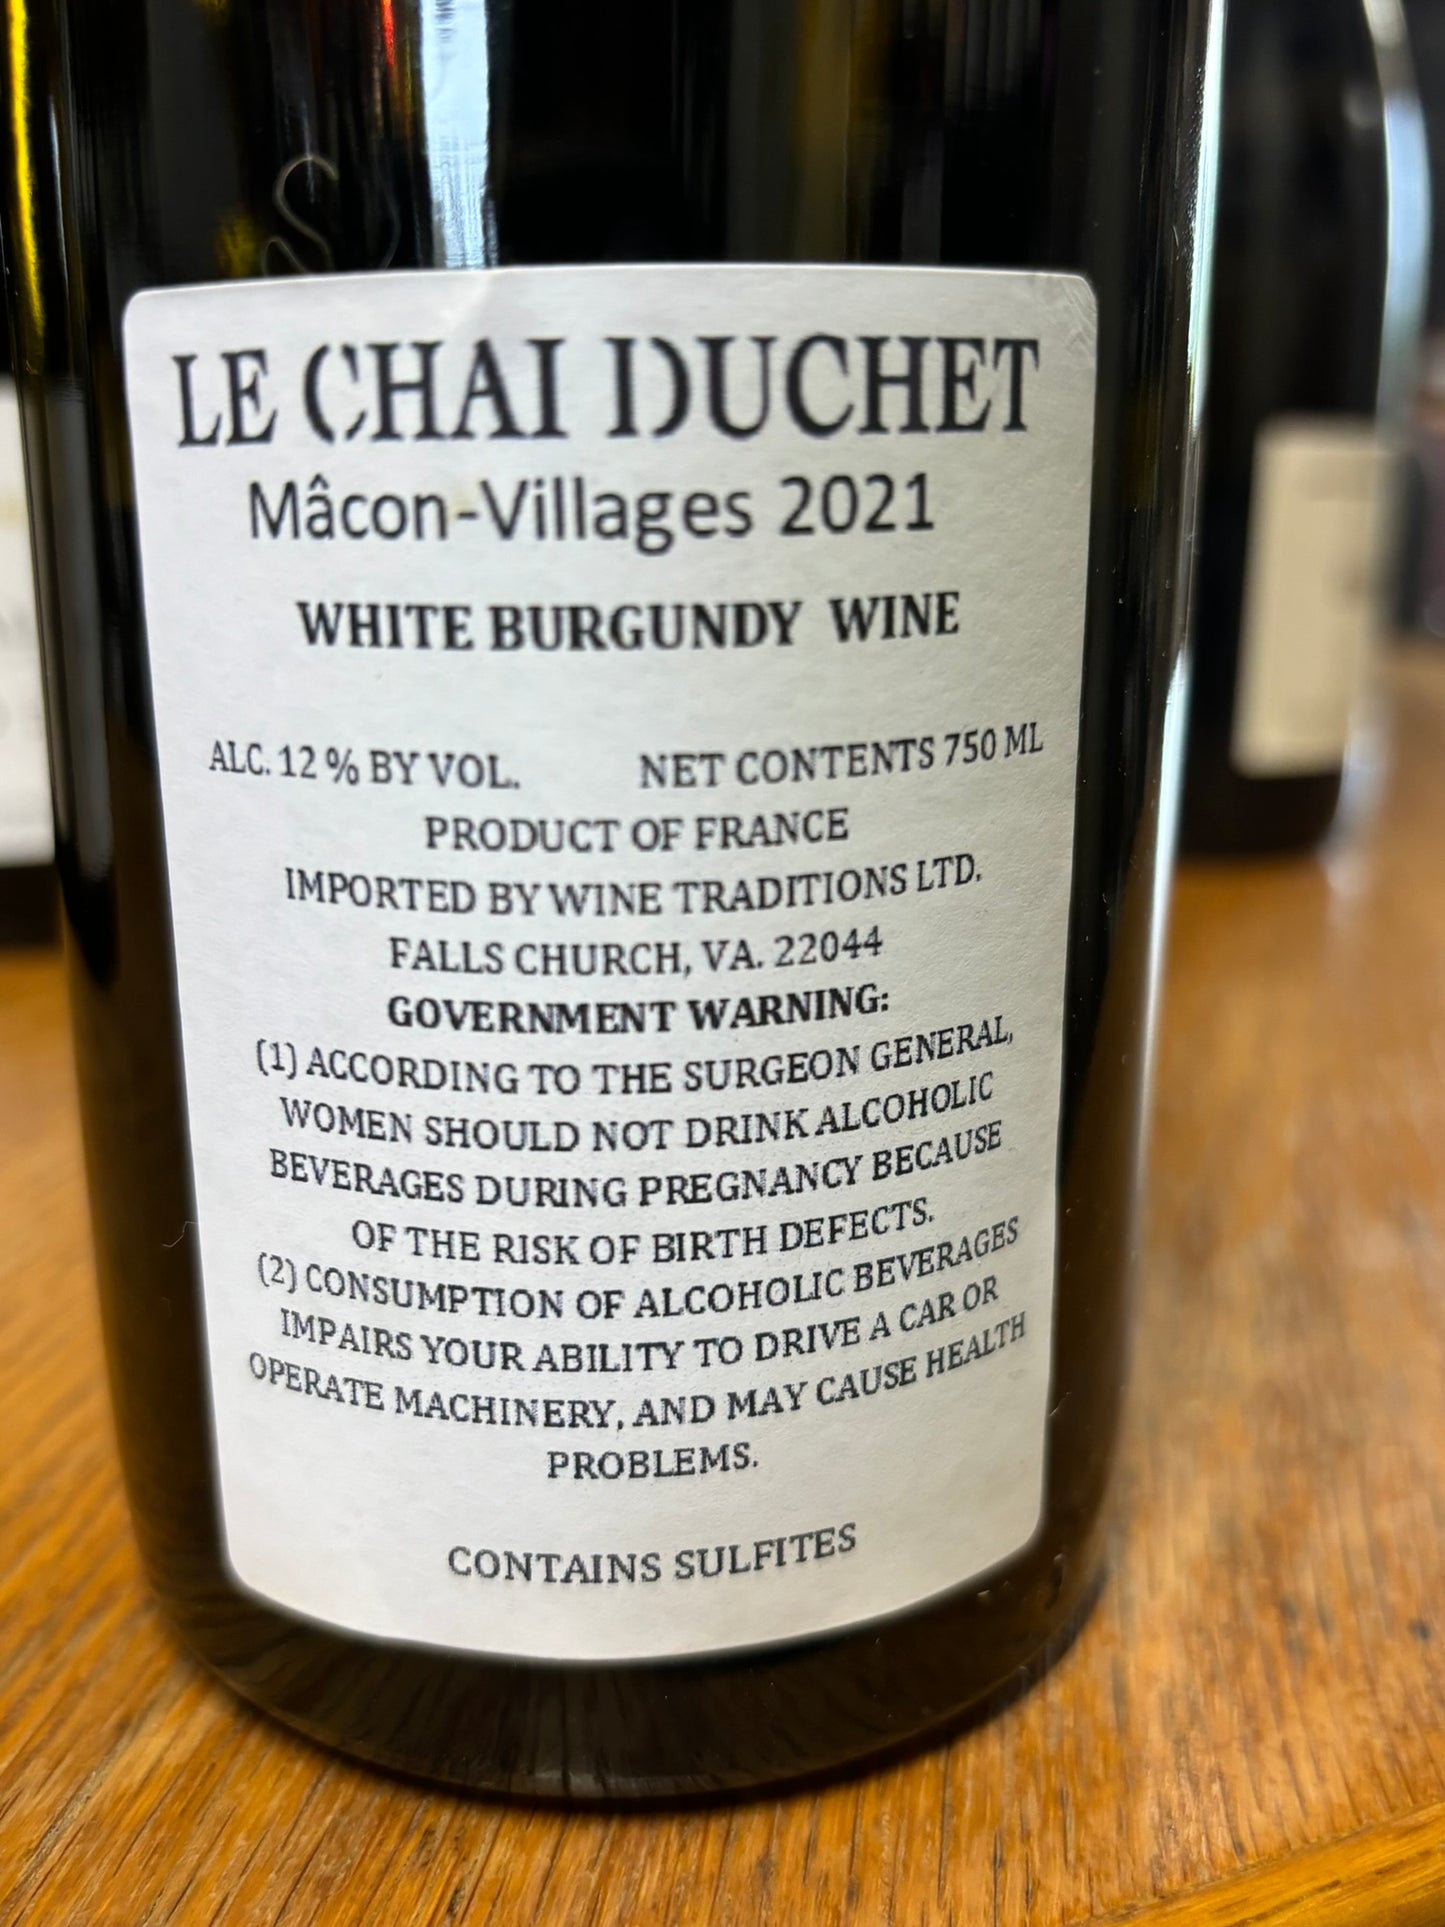 LE CHAI DUCHET 2021 Chardonnay 'Macon-Villages' (Burgundy, France)